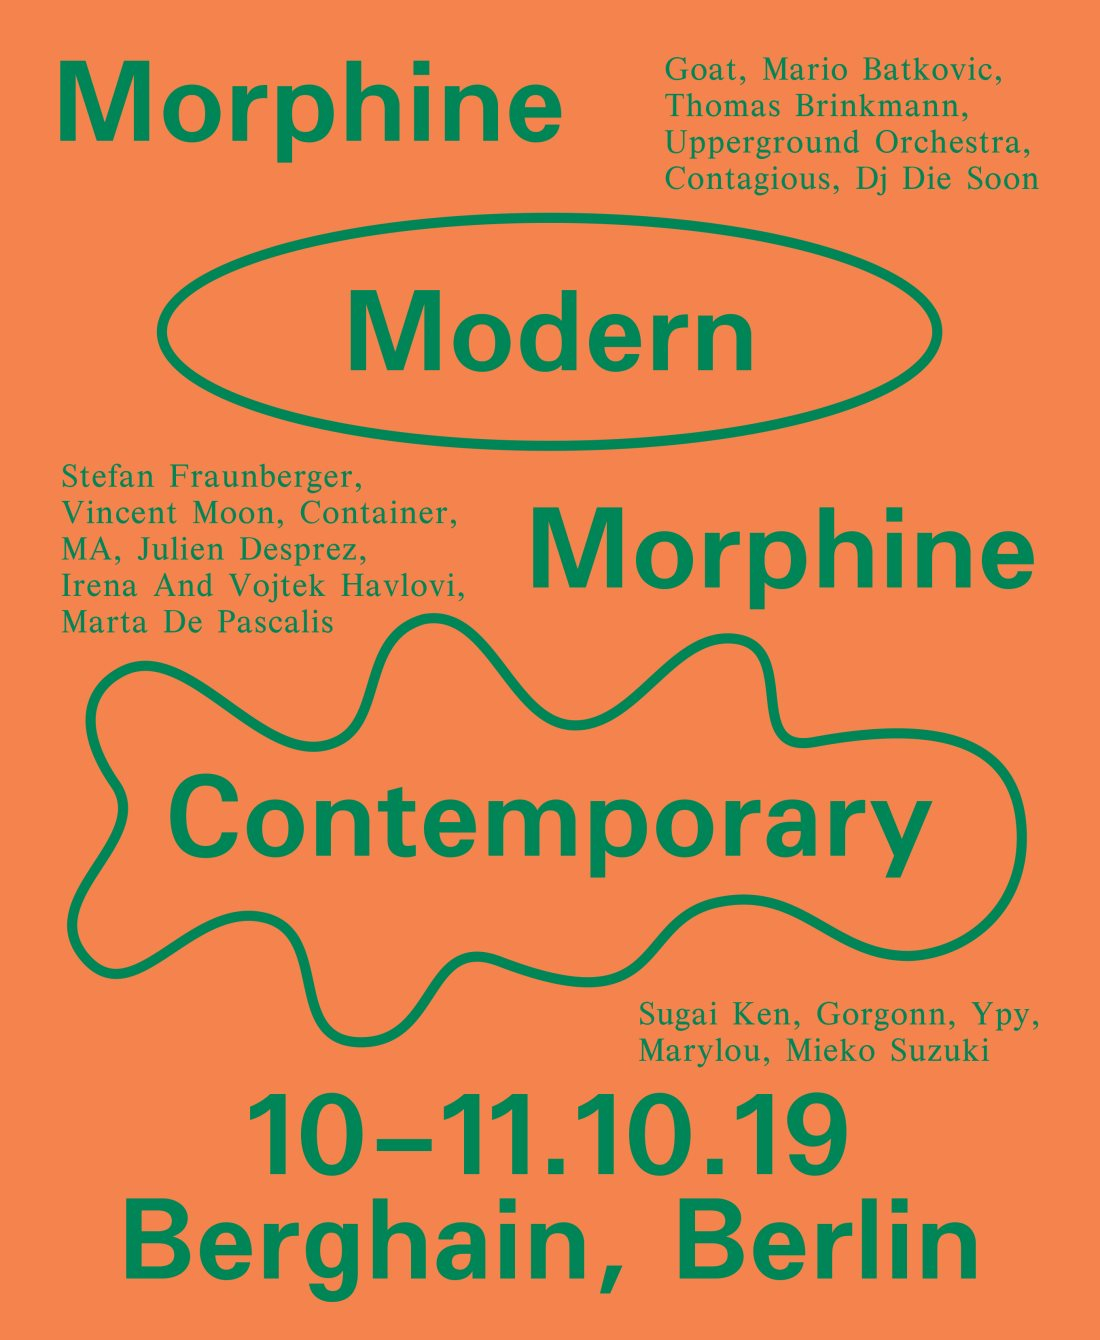 Morphine Modern / Morphine Contemporary - Flyer back